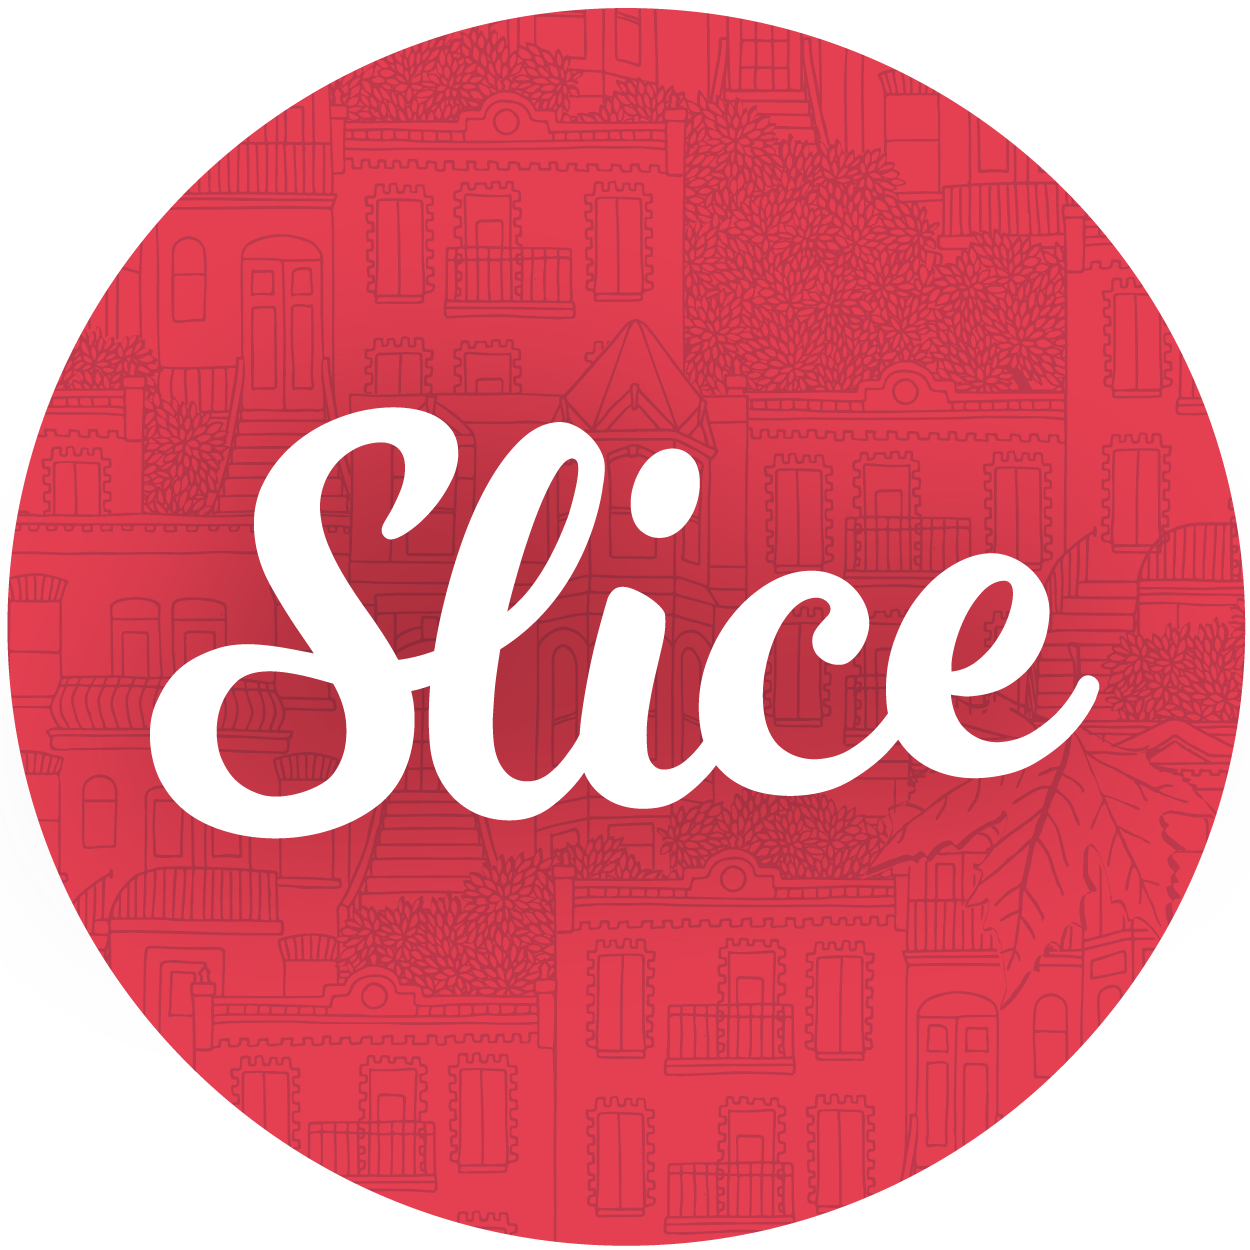 Slice Labs